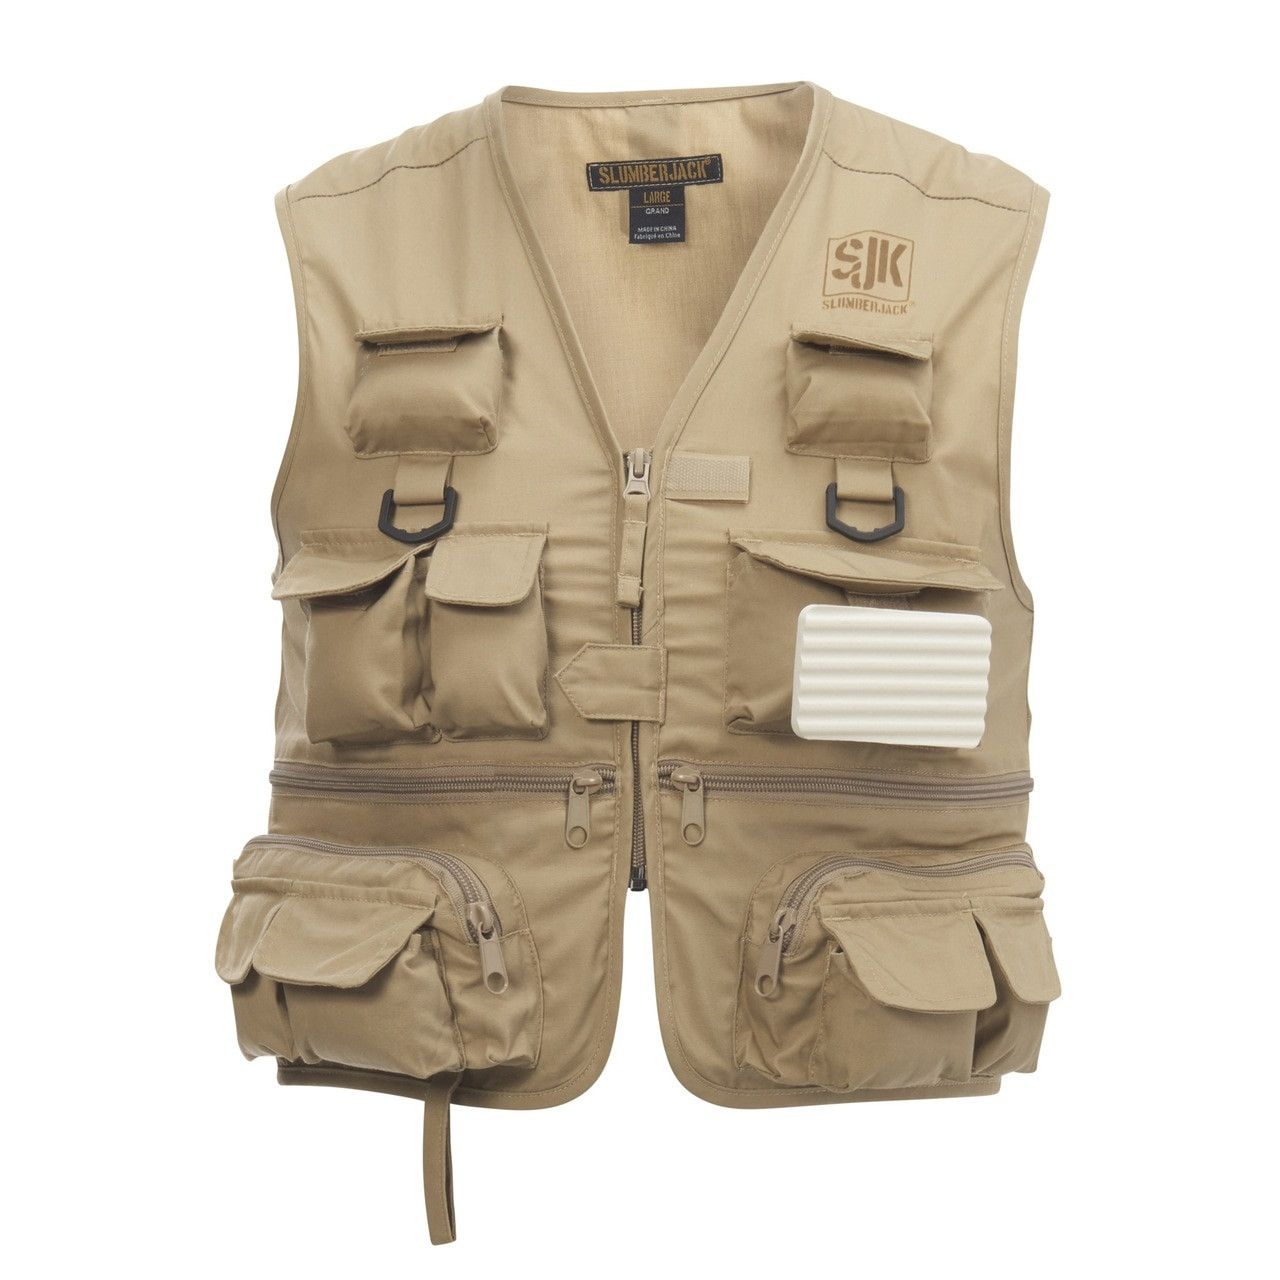 SJK Youth Lure 26 Pocket Fishing Vest, Size XL